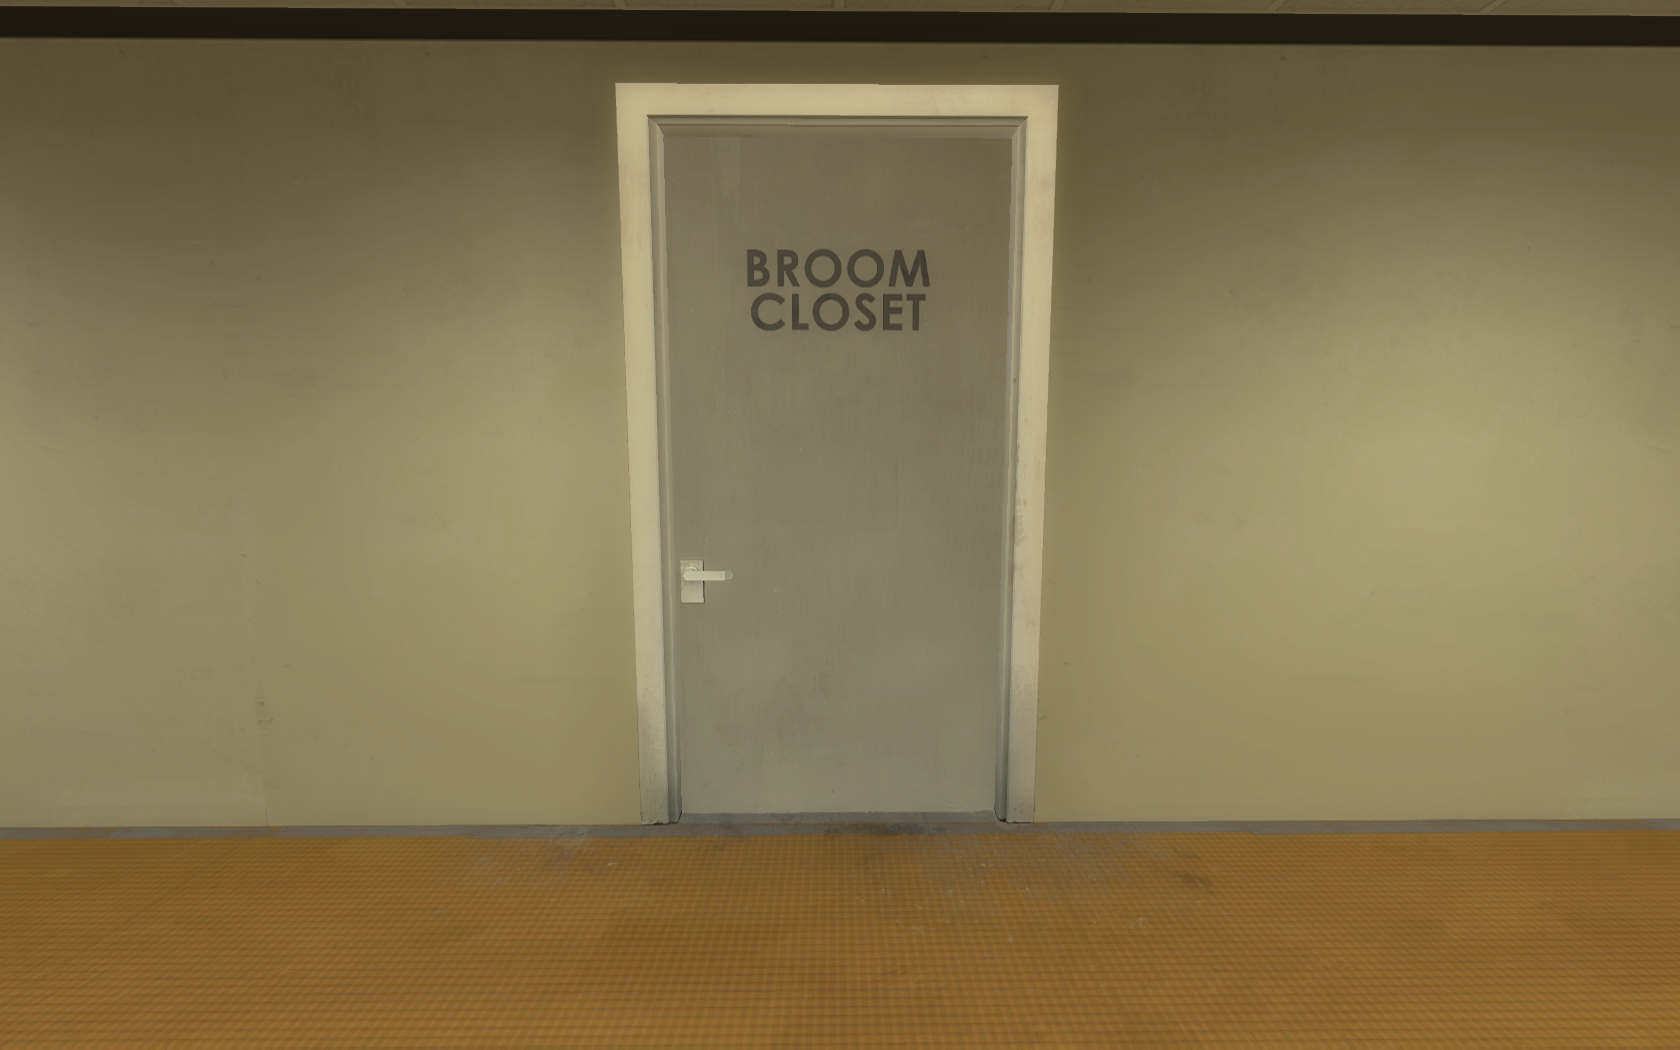 Broom closet ending